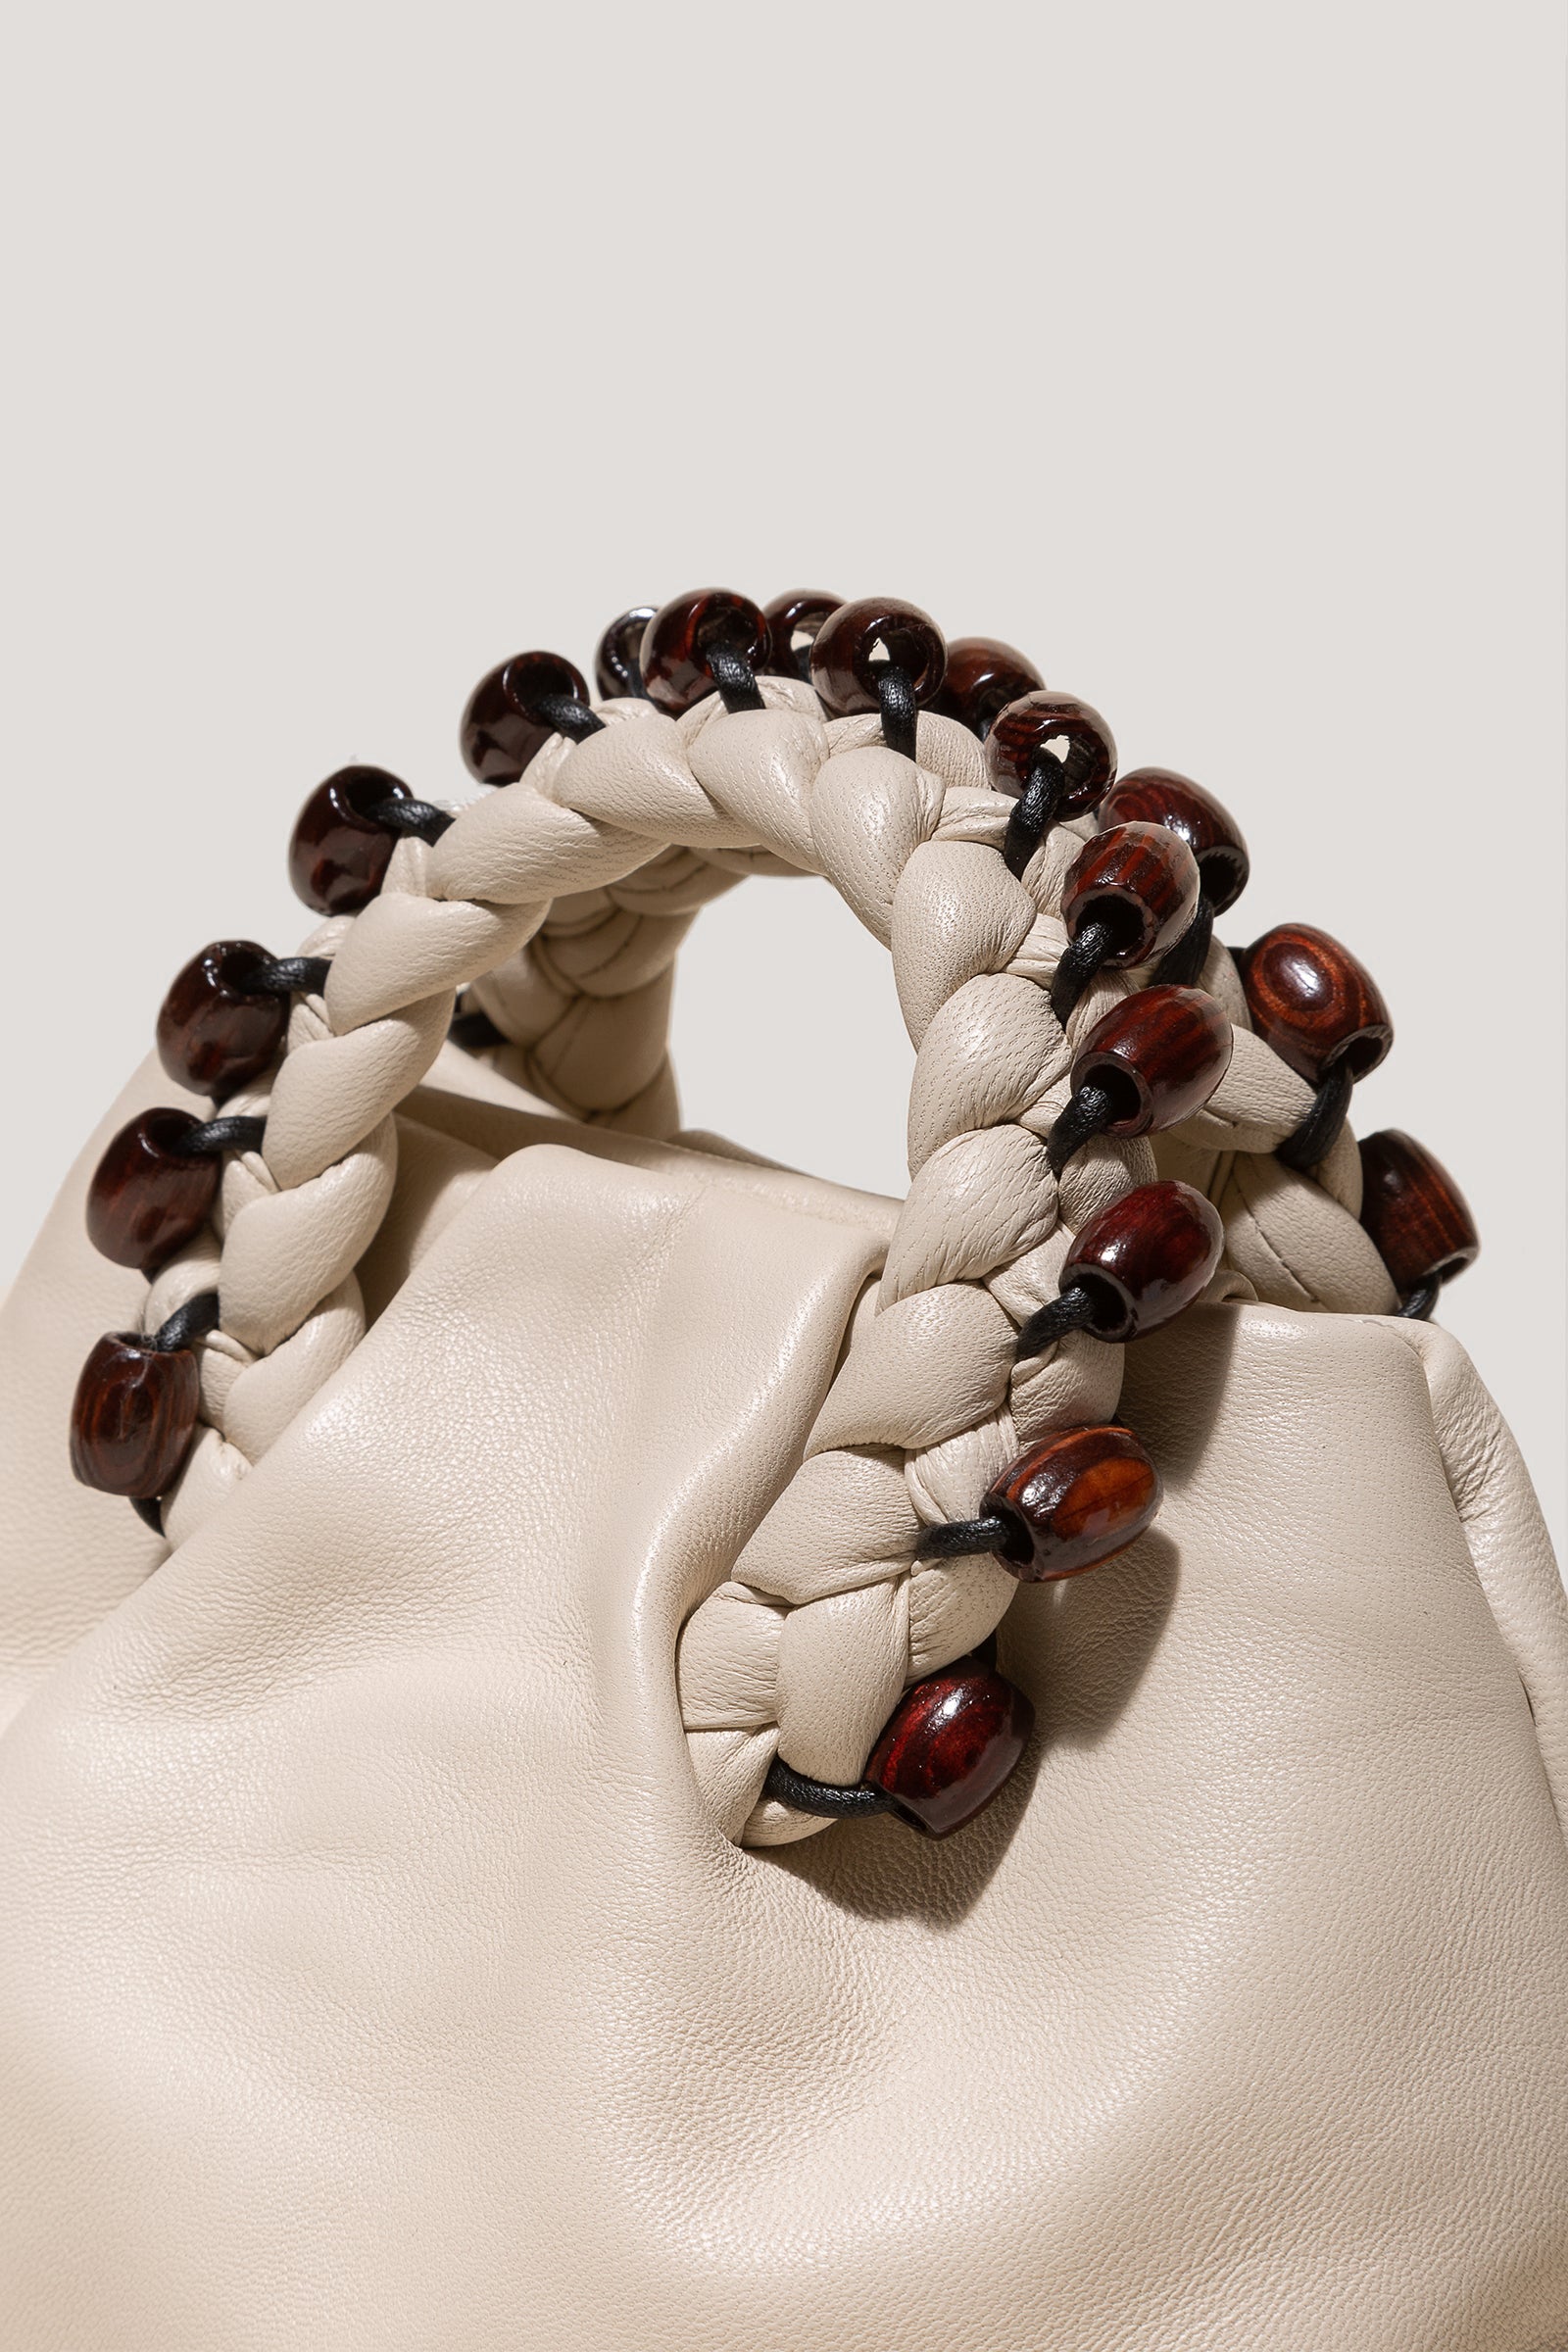 Bombon Beads in Cream